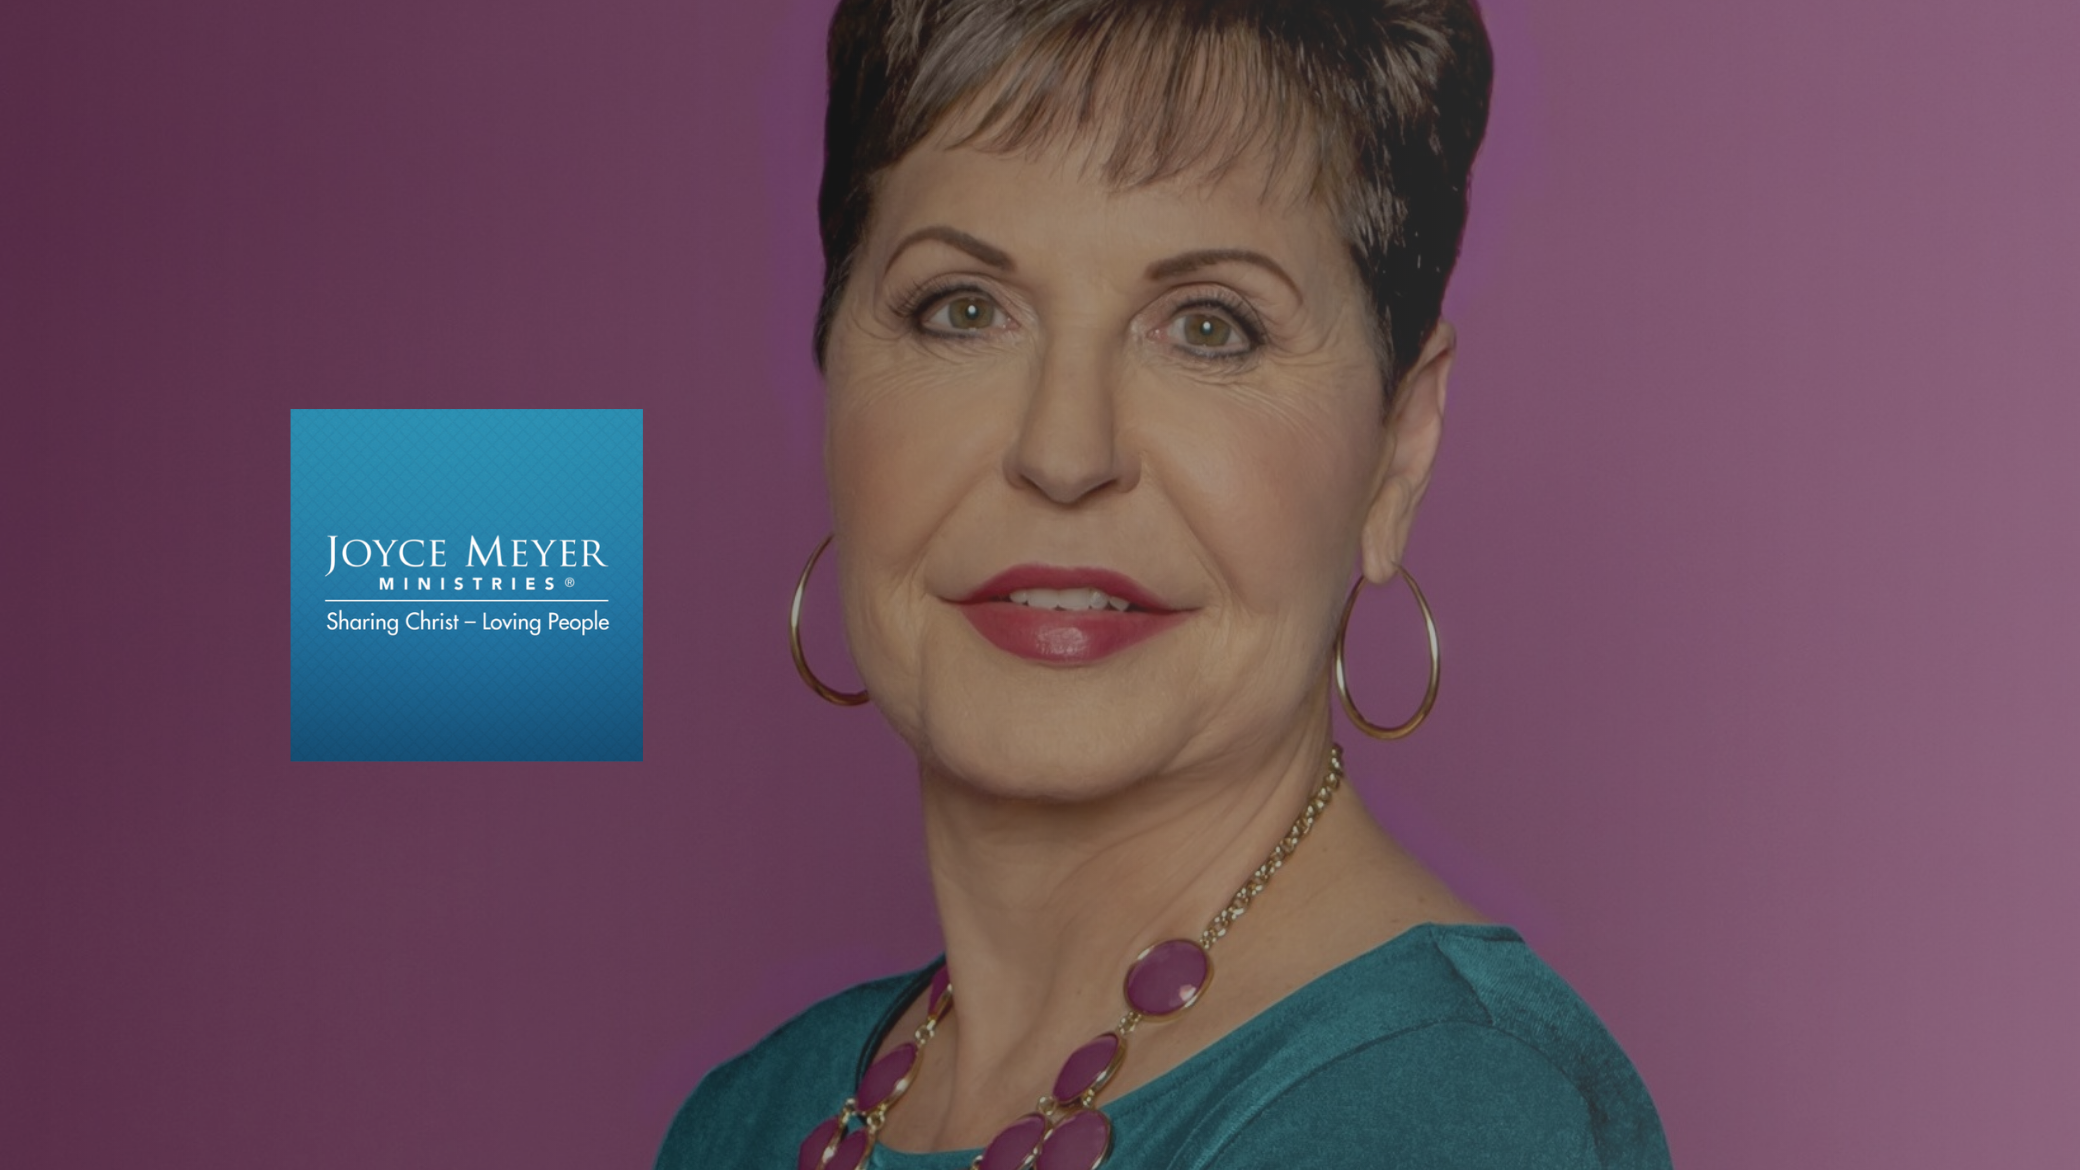 Joyce Meyer Ministries - Enjoying Everyday Life TV Show